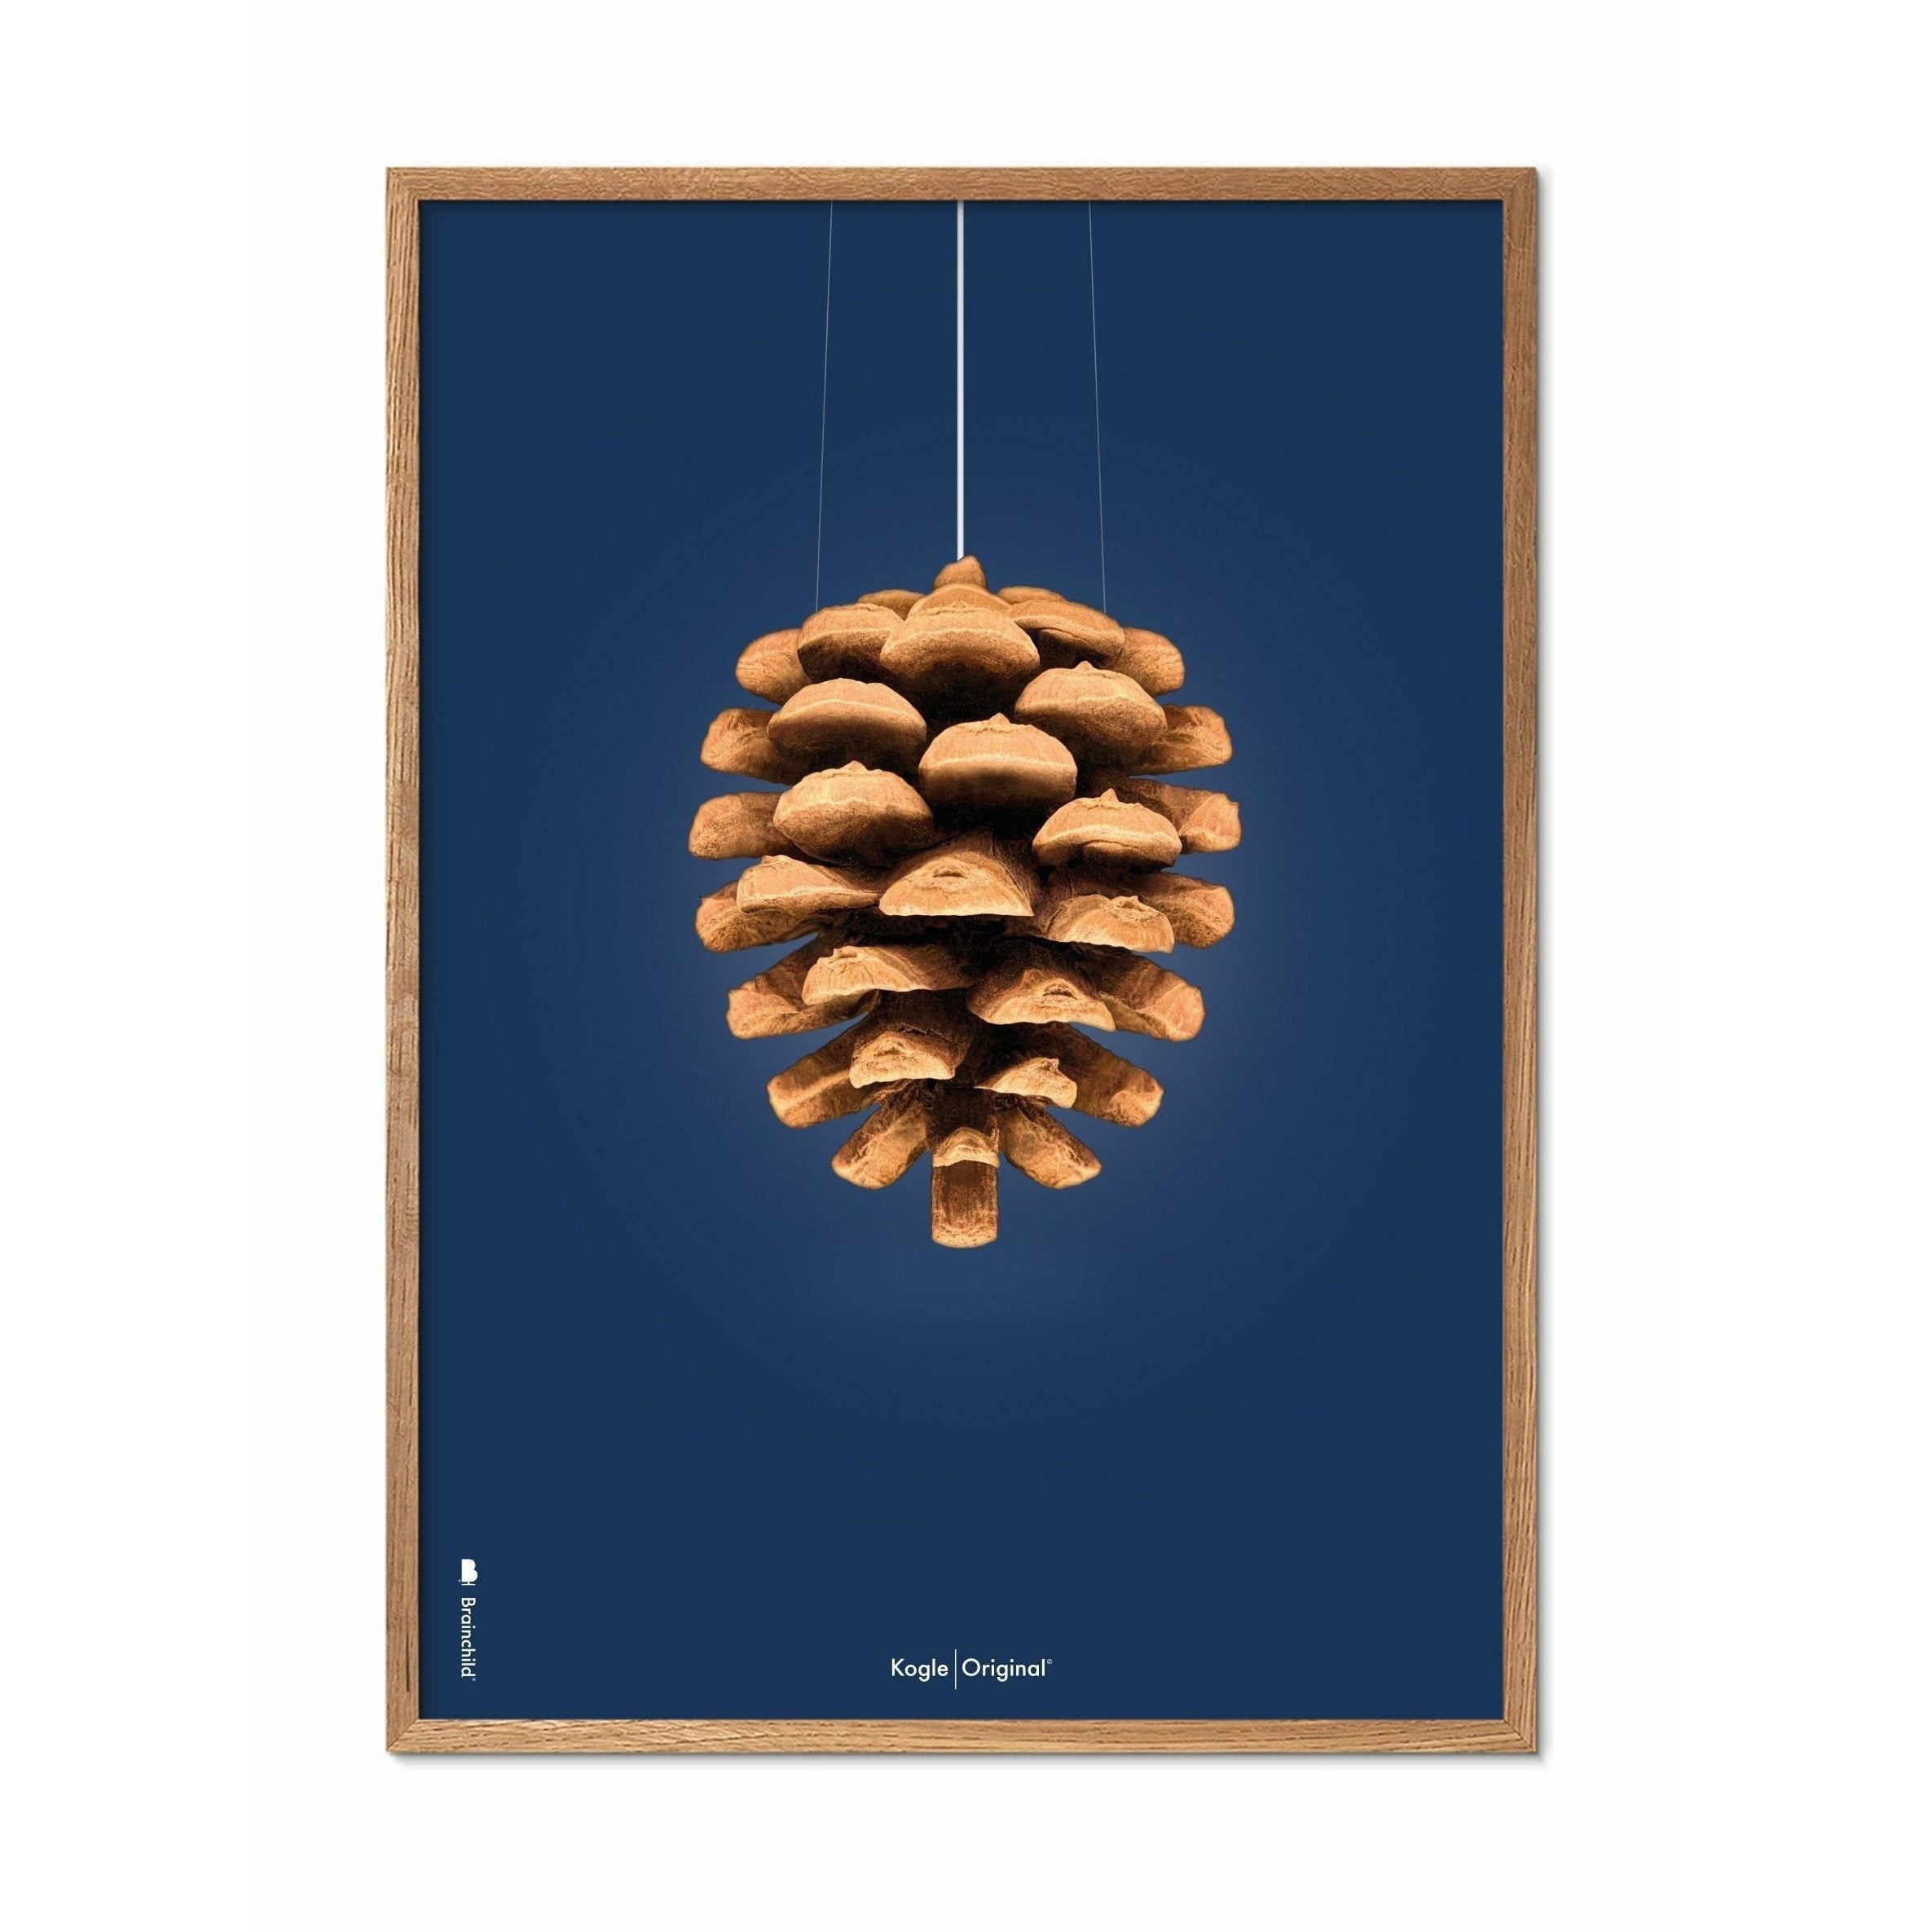 Brainchild Kogle Klassisk Plakat, Ramme I Lyst Træ 70X100 Cm, Mørkeblå Baggrund